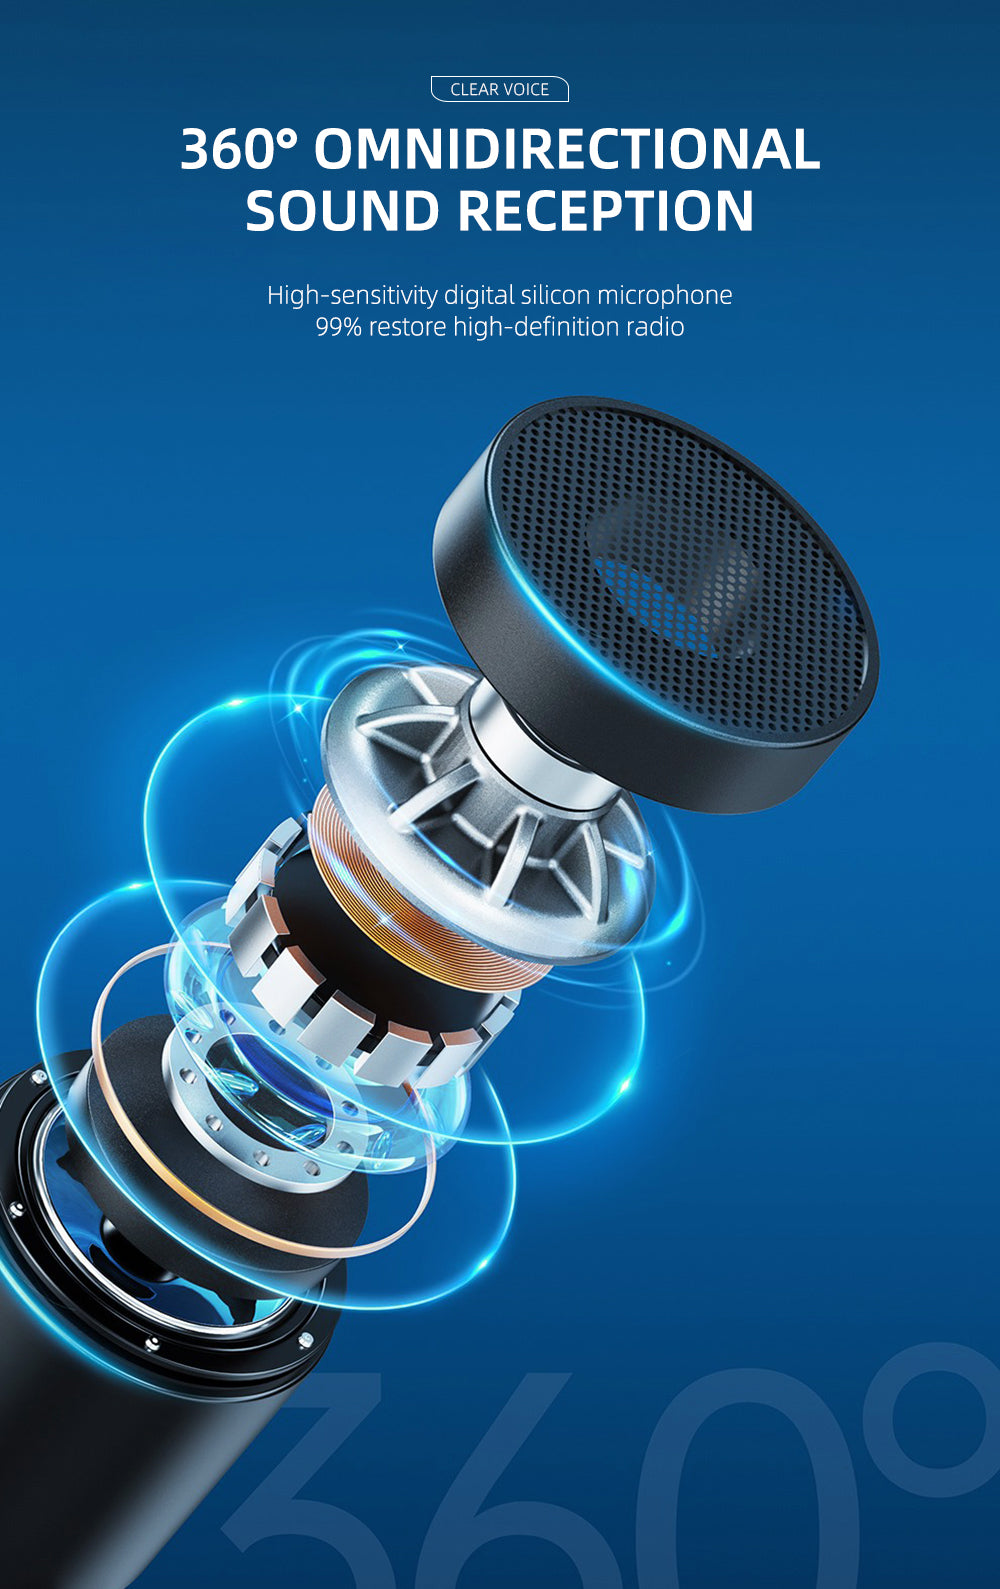 Tokdance Plug-Play Wireless Lavalier Microphone for iPhone iPad,Mini Lapel Microphone